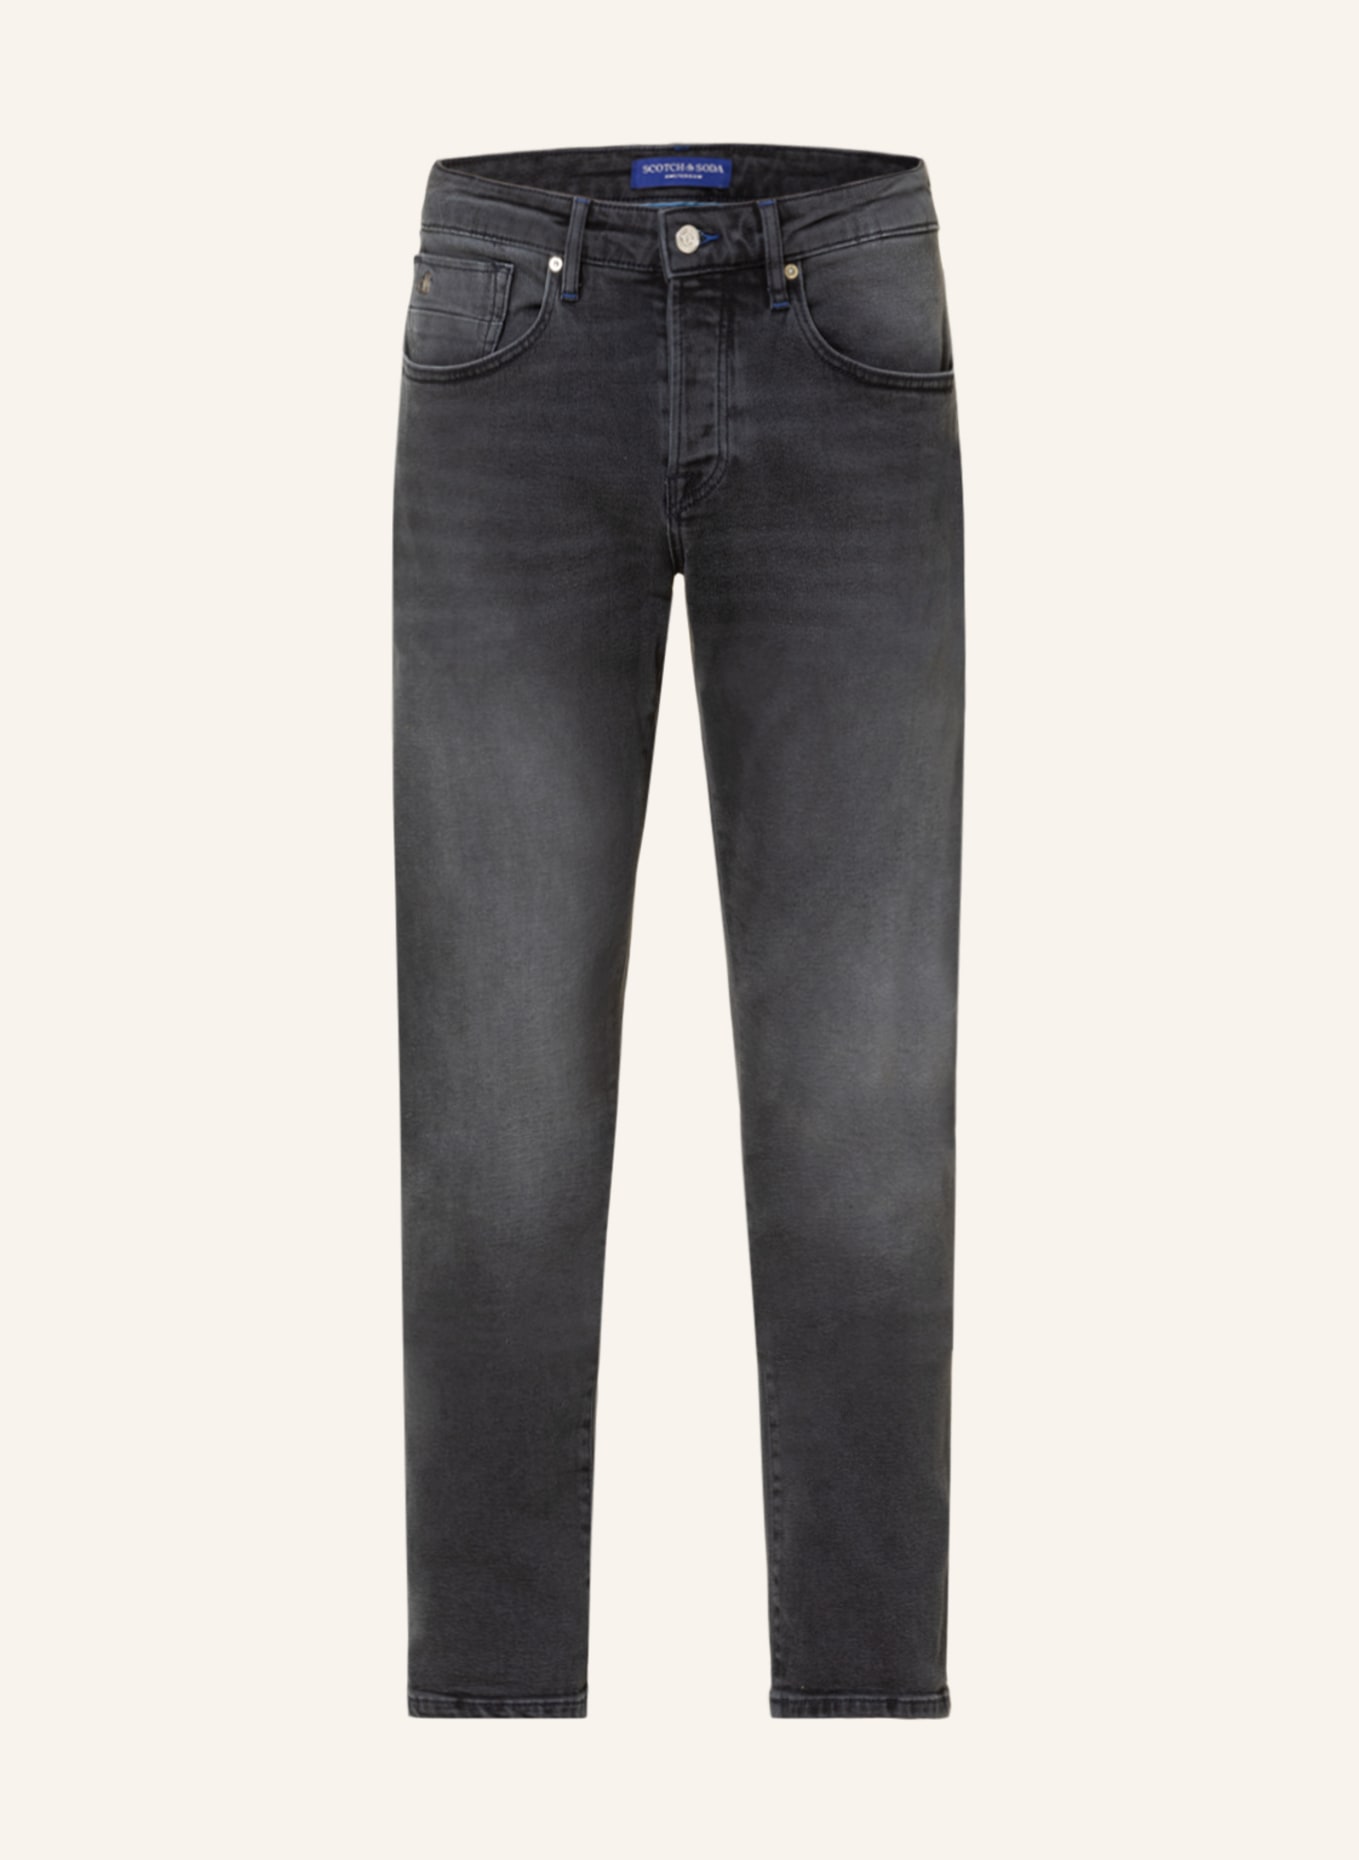 SCOTCH & SODA Jeans Regular Slim Fit, Farbe: 5614 New Hero (Bild 1)